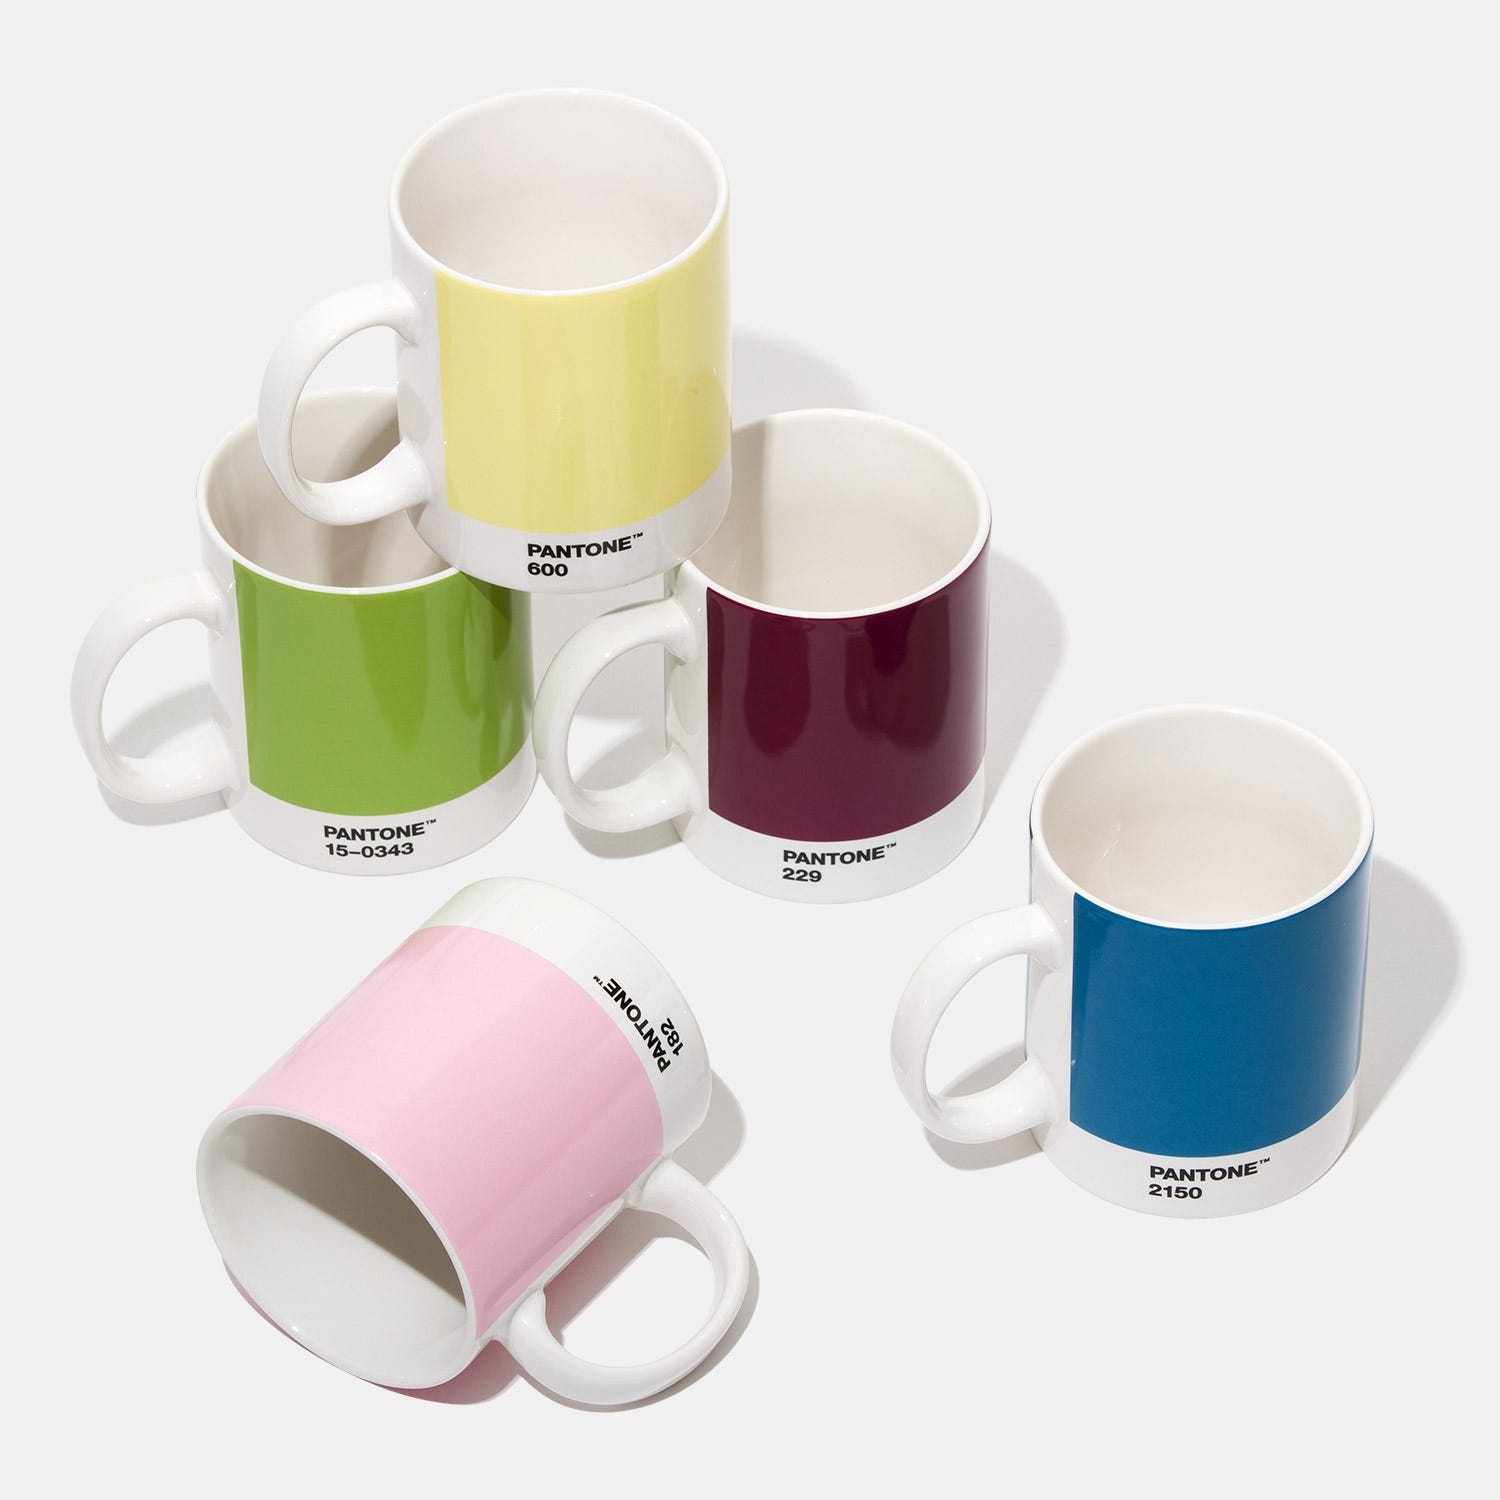 pantone-mugs-group-product-paintru-gift-guide-artists